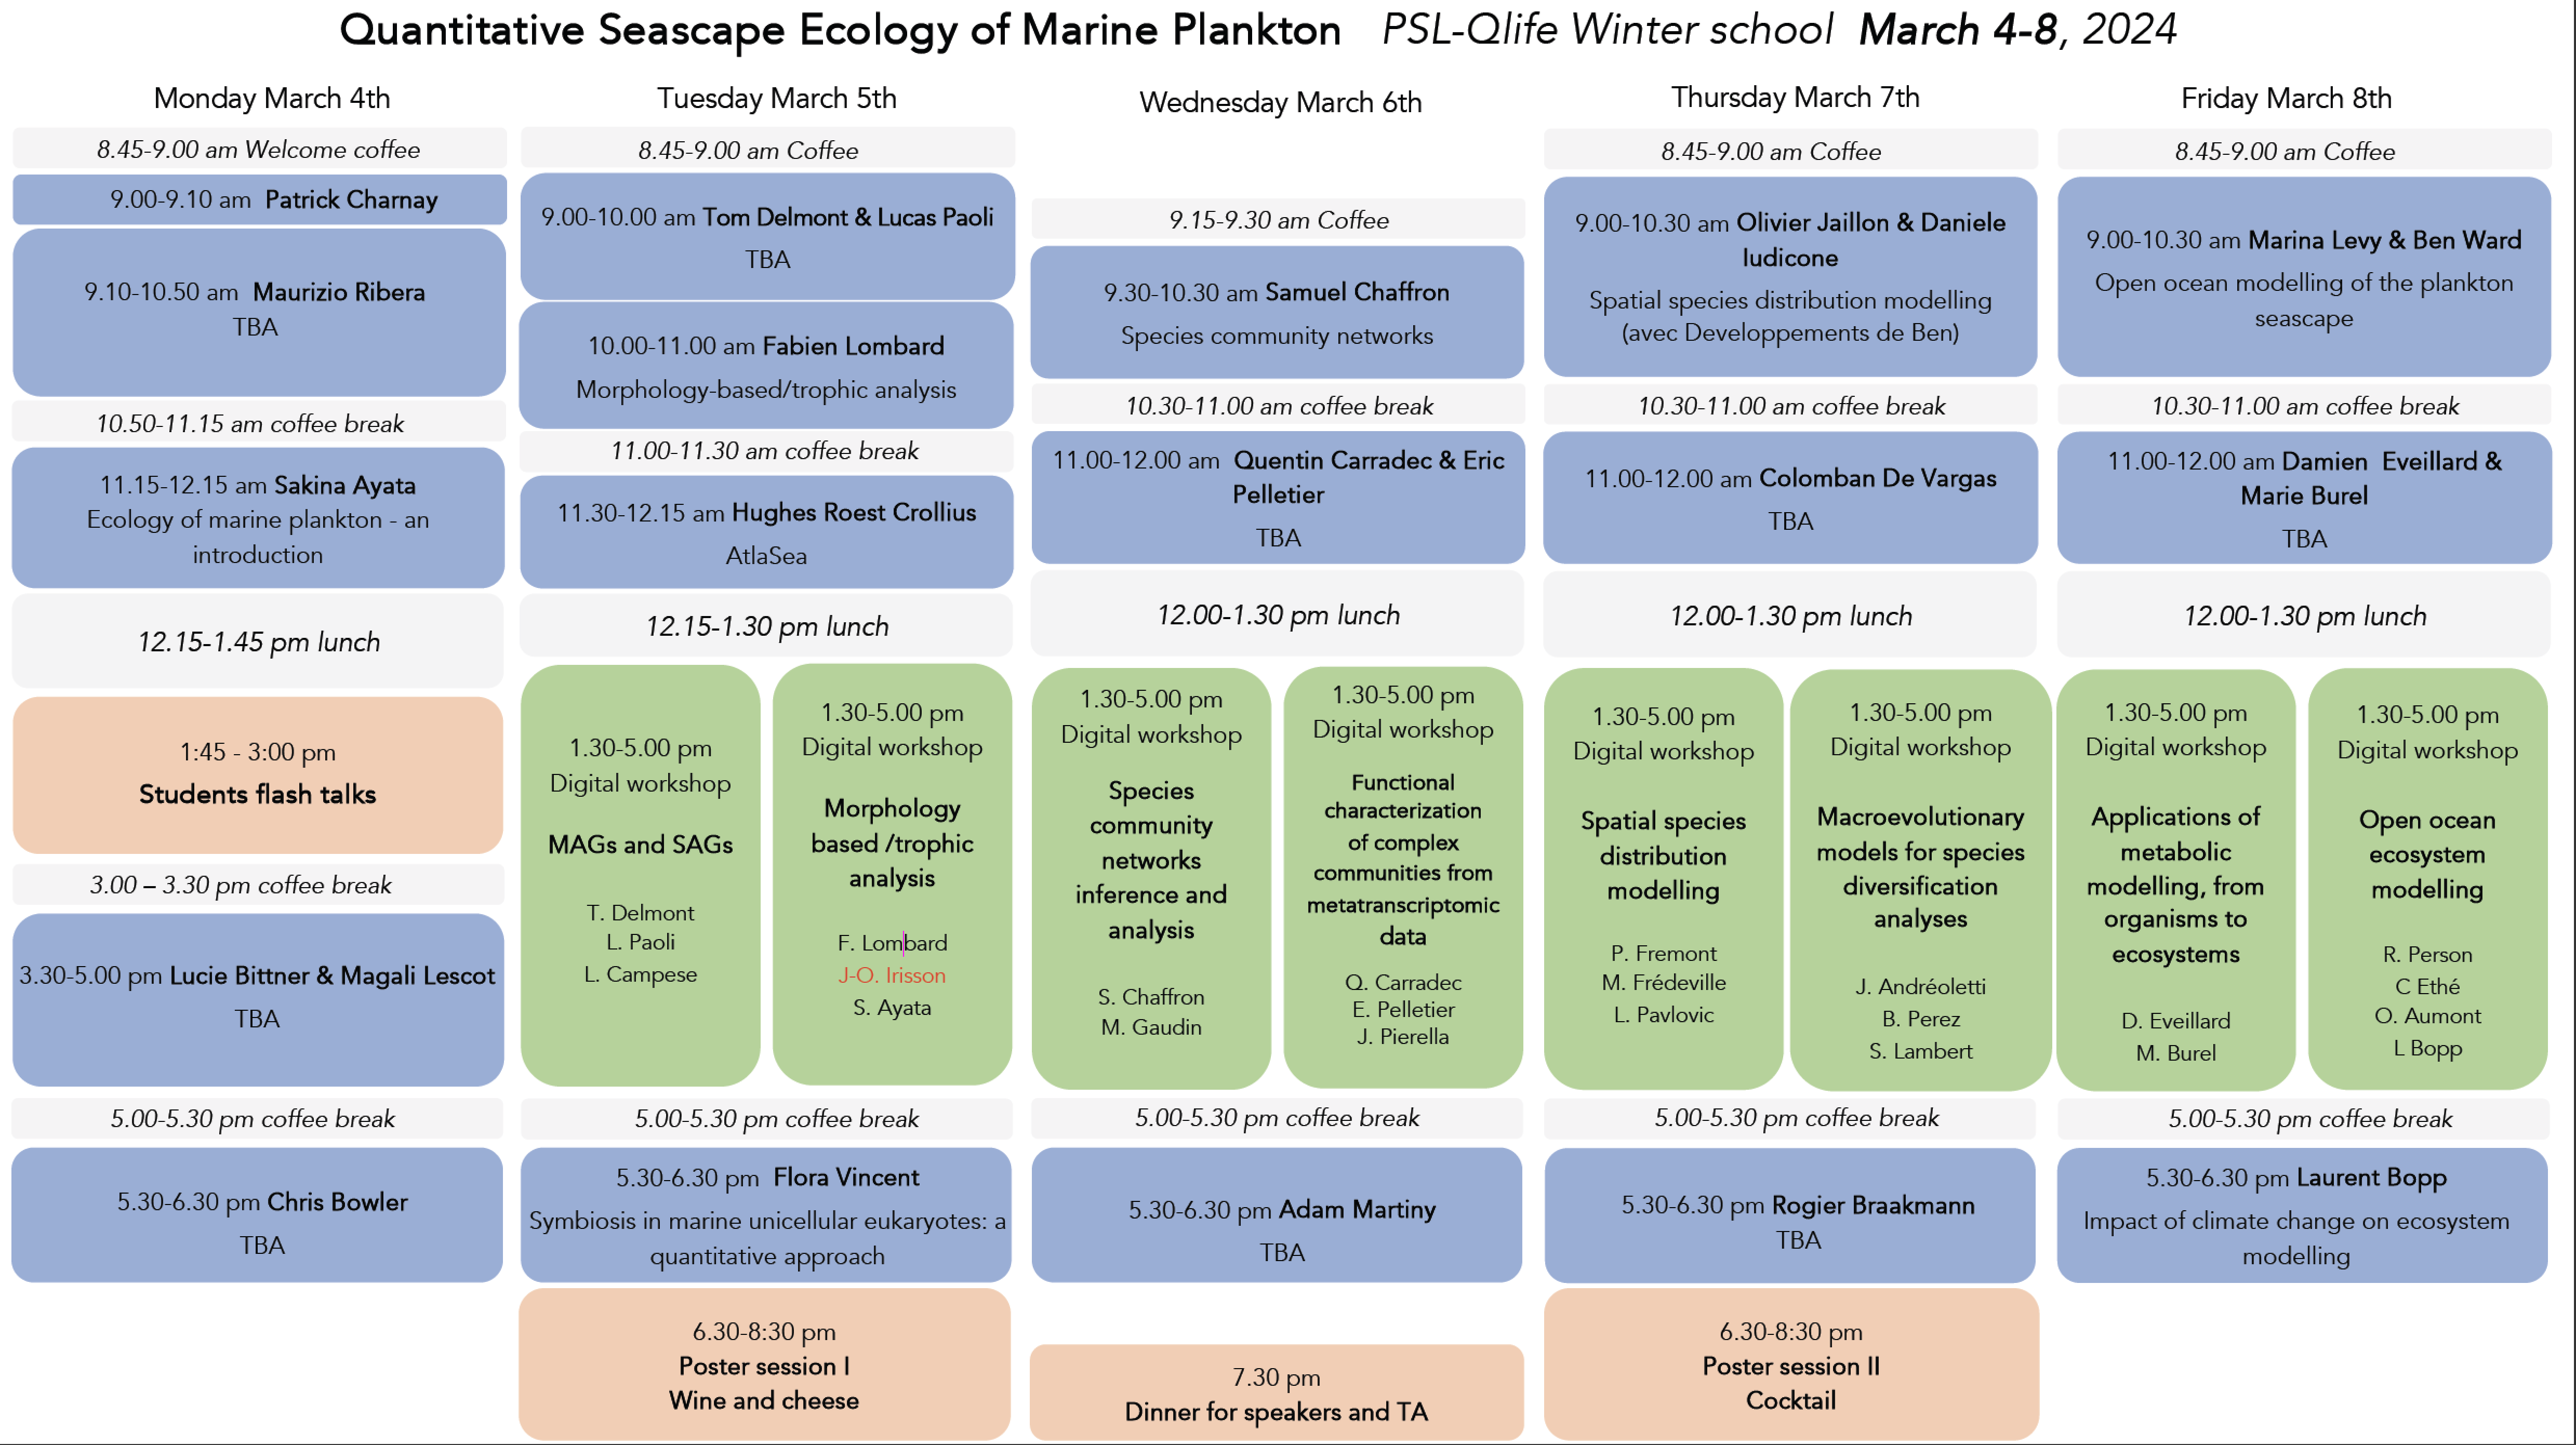 Program "Quantitative Seascape Ecology of Marine Plankton"